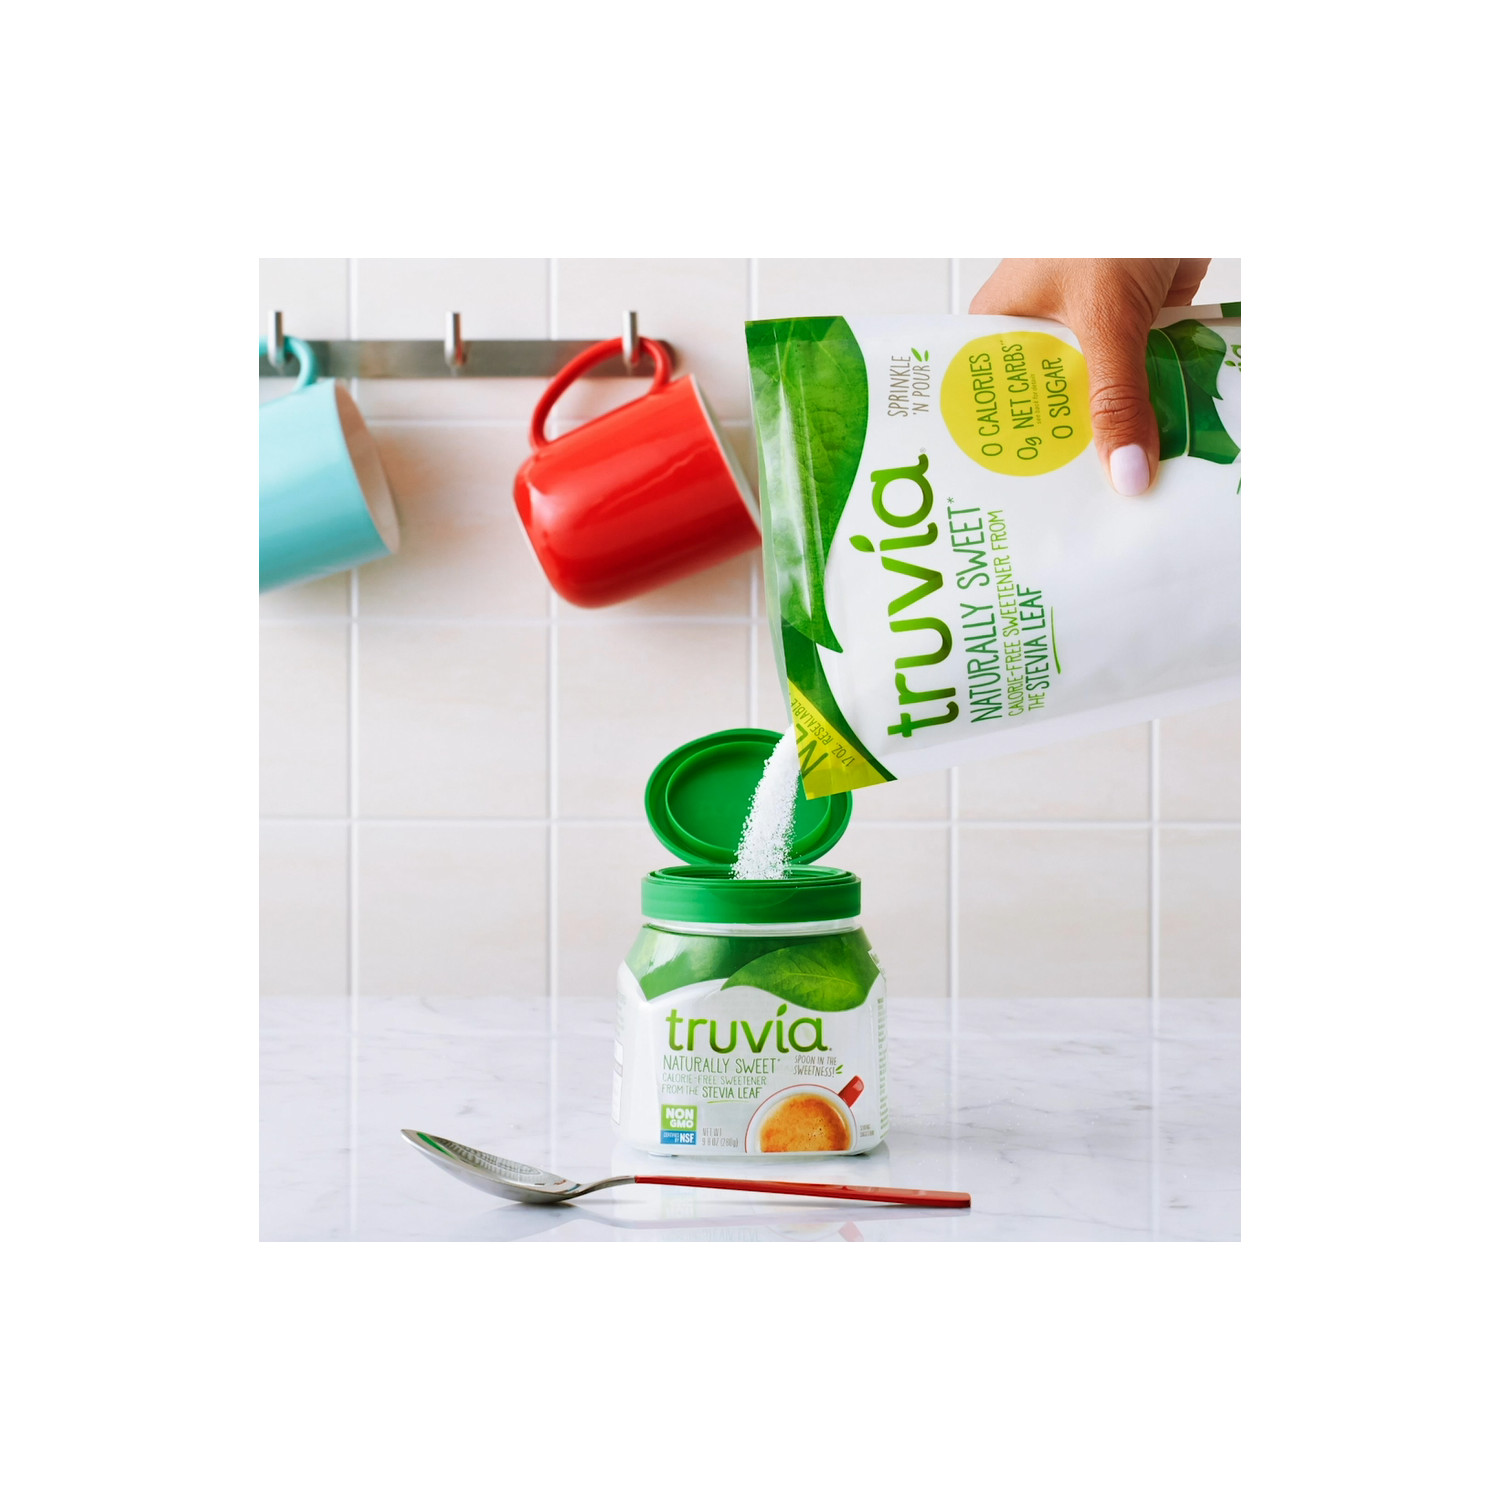 Truvia Calorie-Free Sweetener Jar from the Stevia Leaf (9.8 oz Jar) - image 4 of 7